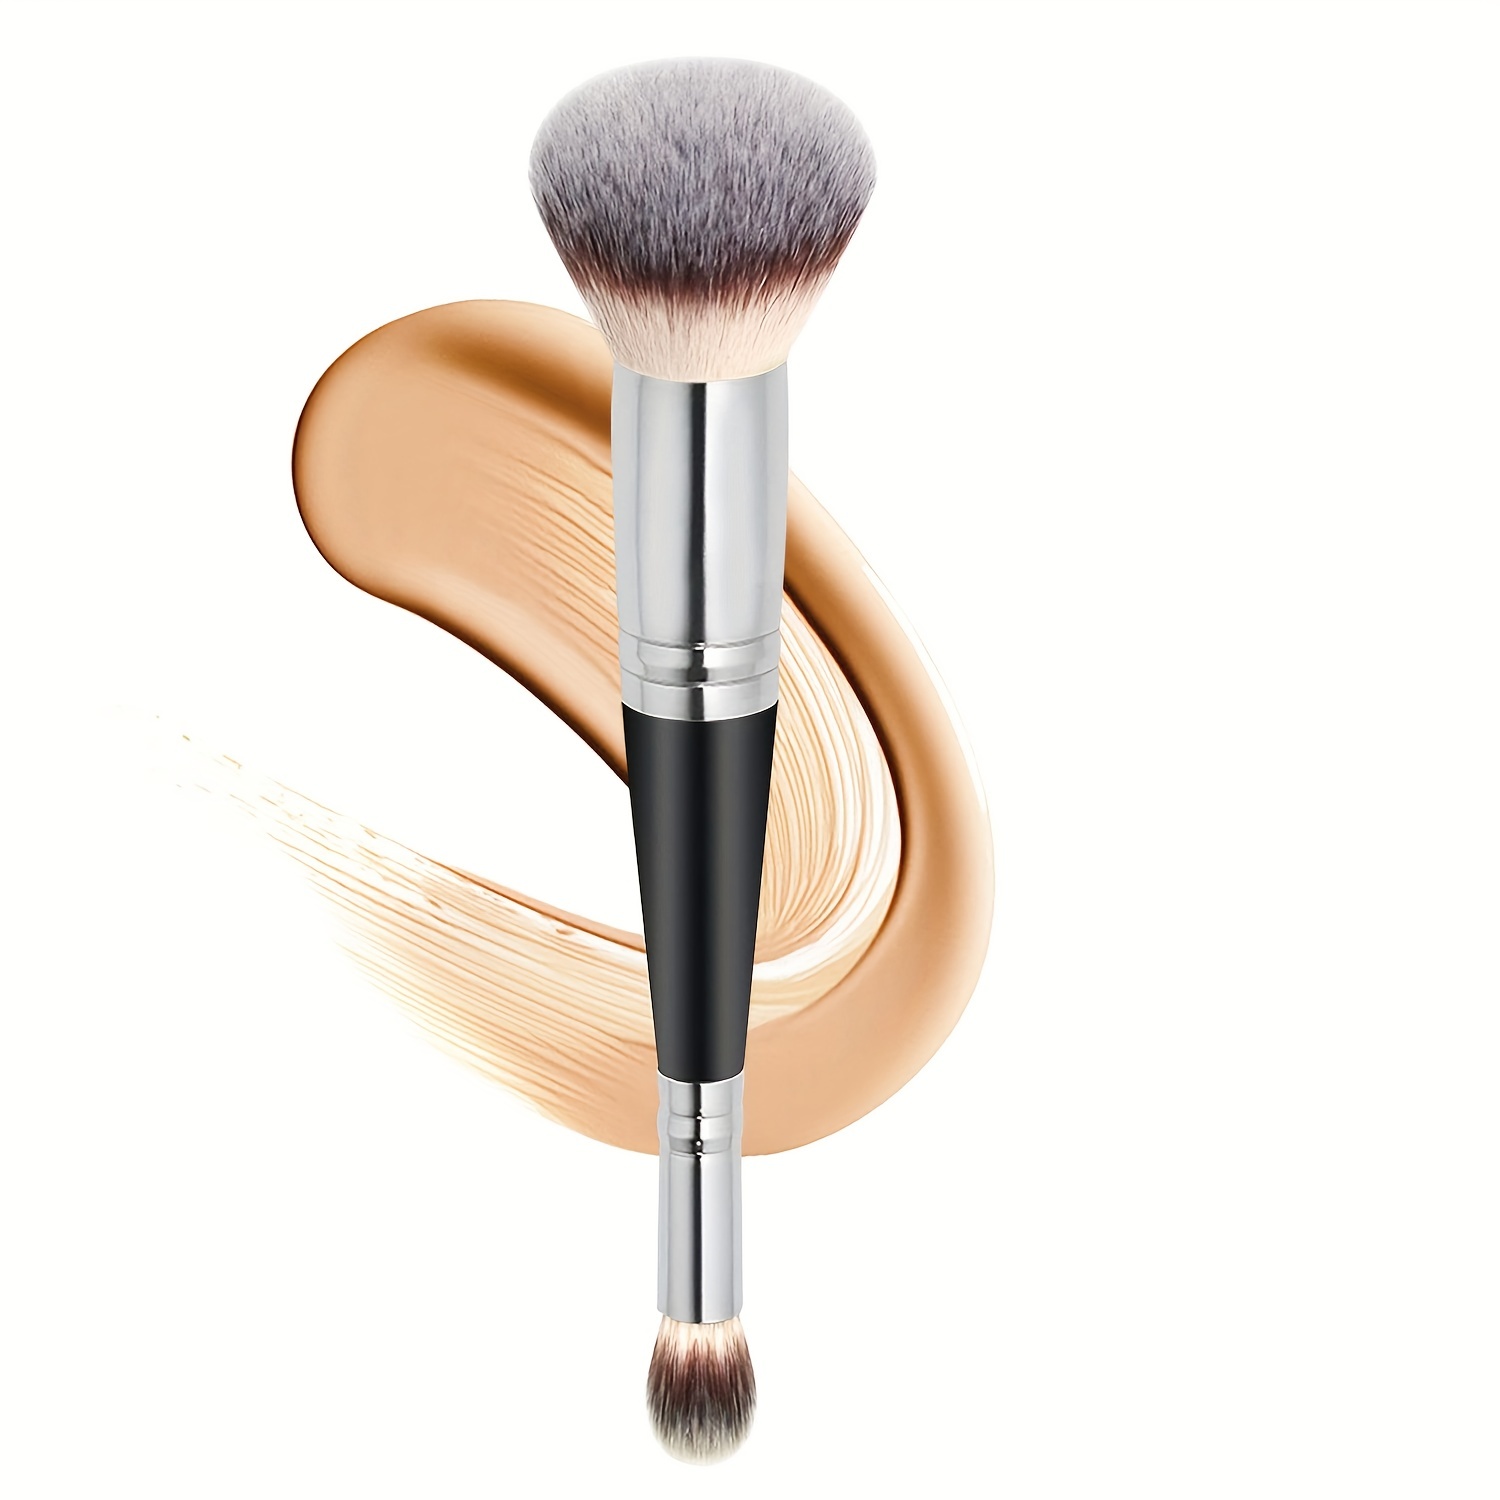 

Dual-ended Foundation Brush - 2-in-1 Make Up Brushes Premium Synthetic Flawless Makeup Brush For Kabuki Brush Blending Liquid Powder Concealer Cream Contour Blush - 1pc